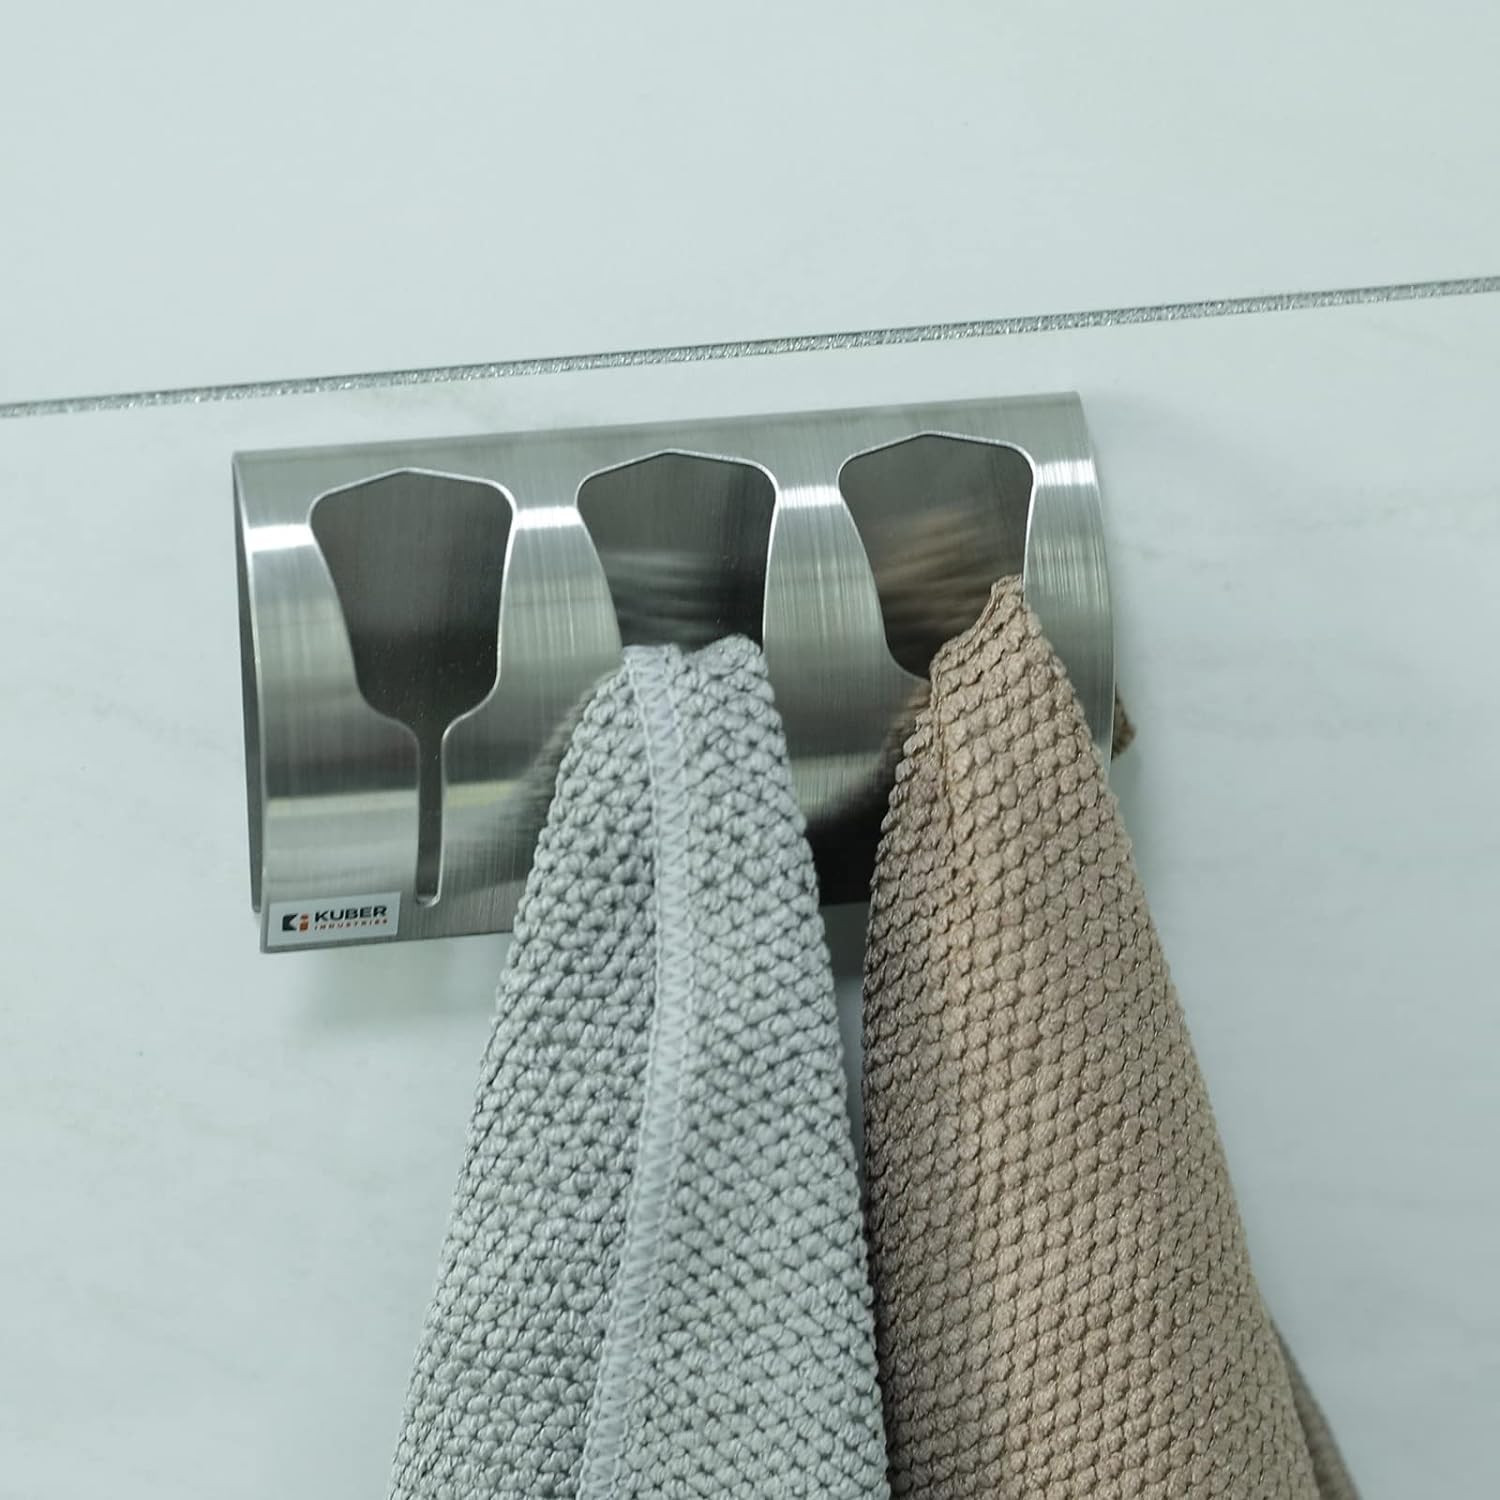 Kuber Industries Stainless Steel Towel Bar Holder|Cabinet Hanger Over Door Kitchen Hook|Holder|ZT-0401-3|Black